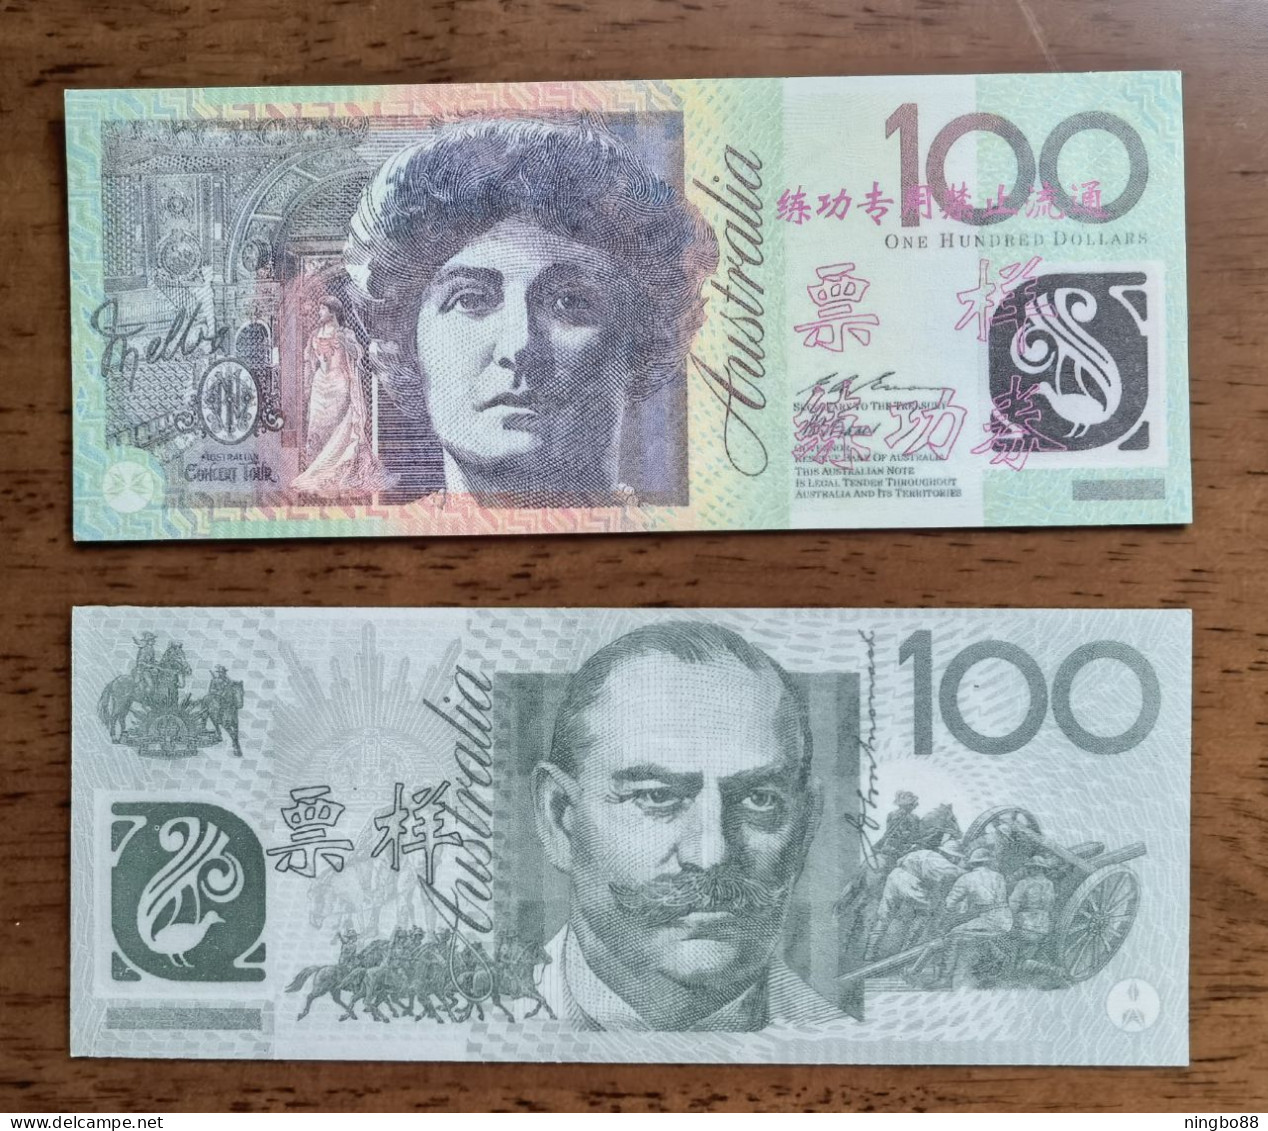 China BOC Bank (bank Of China) Training/test Banknote,AUSTRALIA B-2 Series 100 Dollars Note Specimen Overprint - Fakes & Specimens